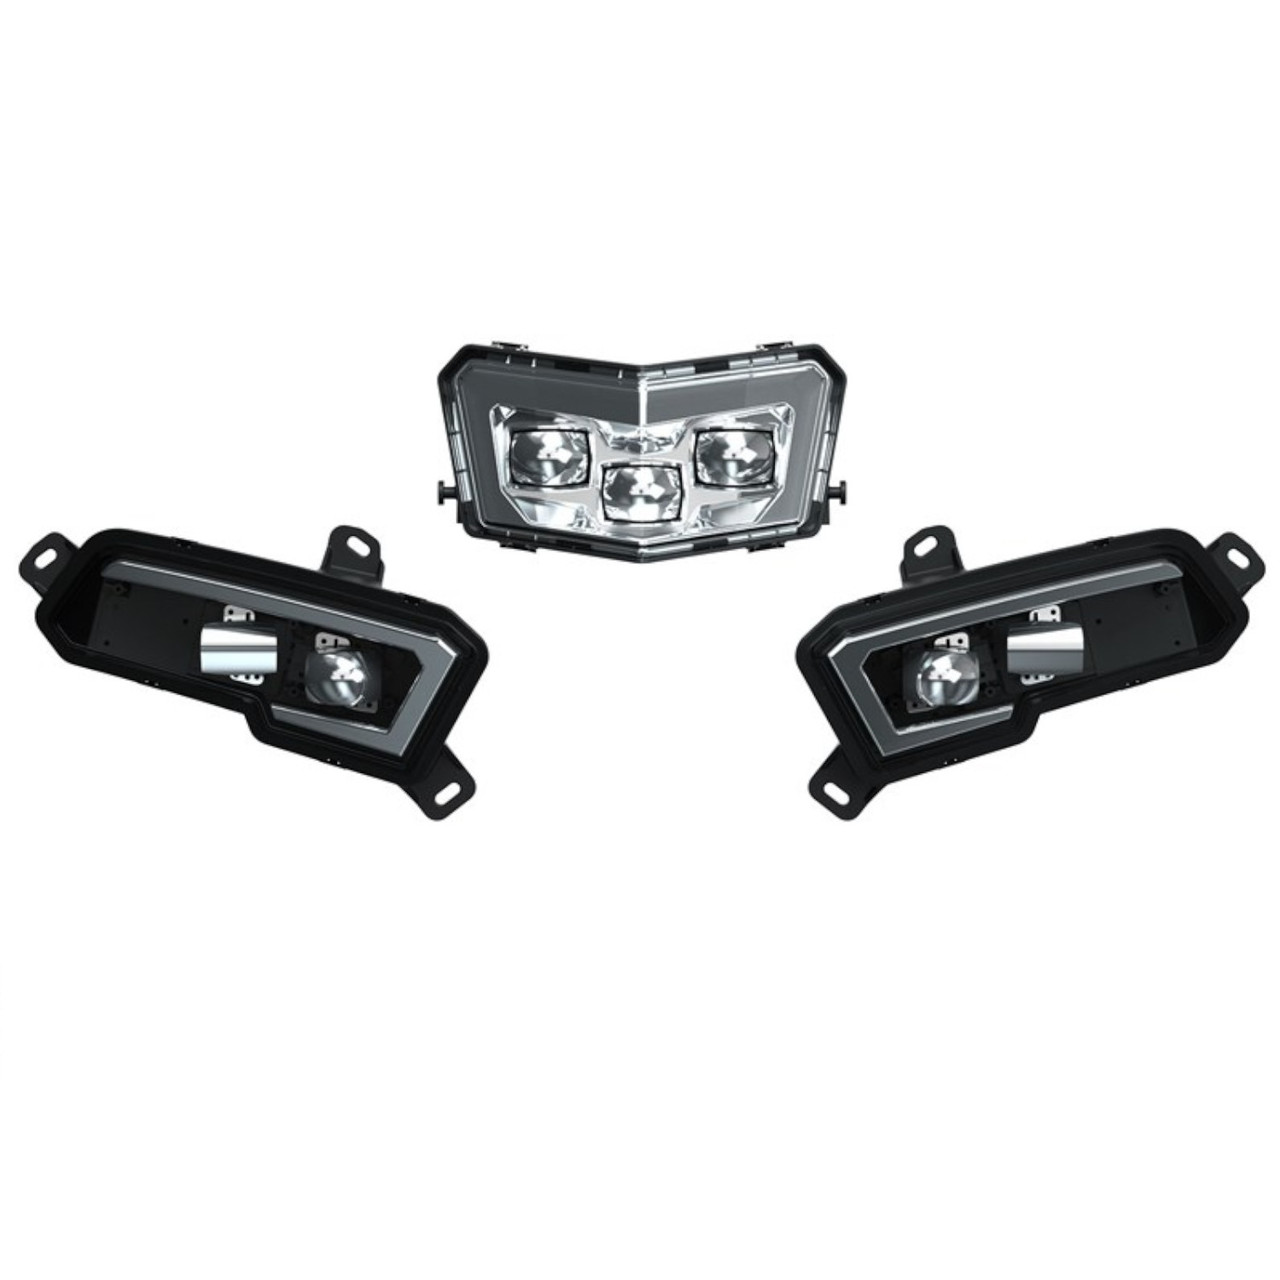 Polaris New OEM, LED Headlight and Pod Light Replacement Kit, 2884859